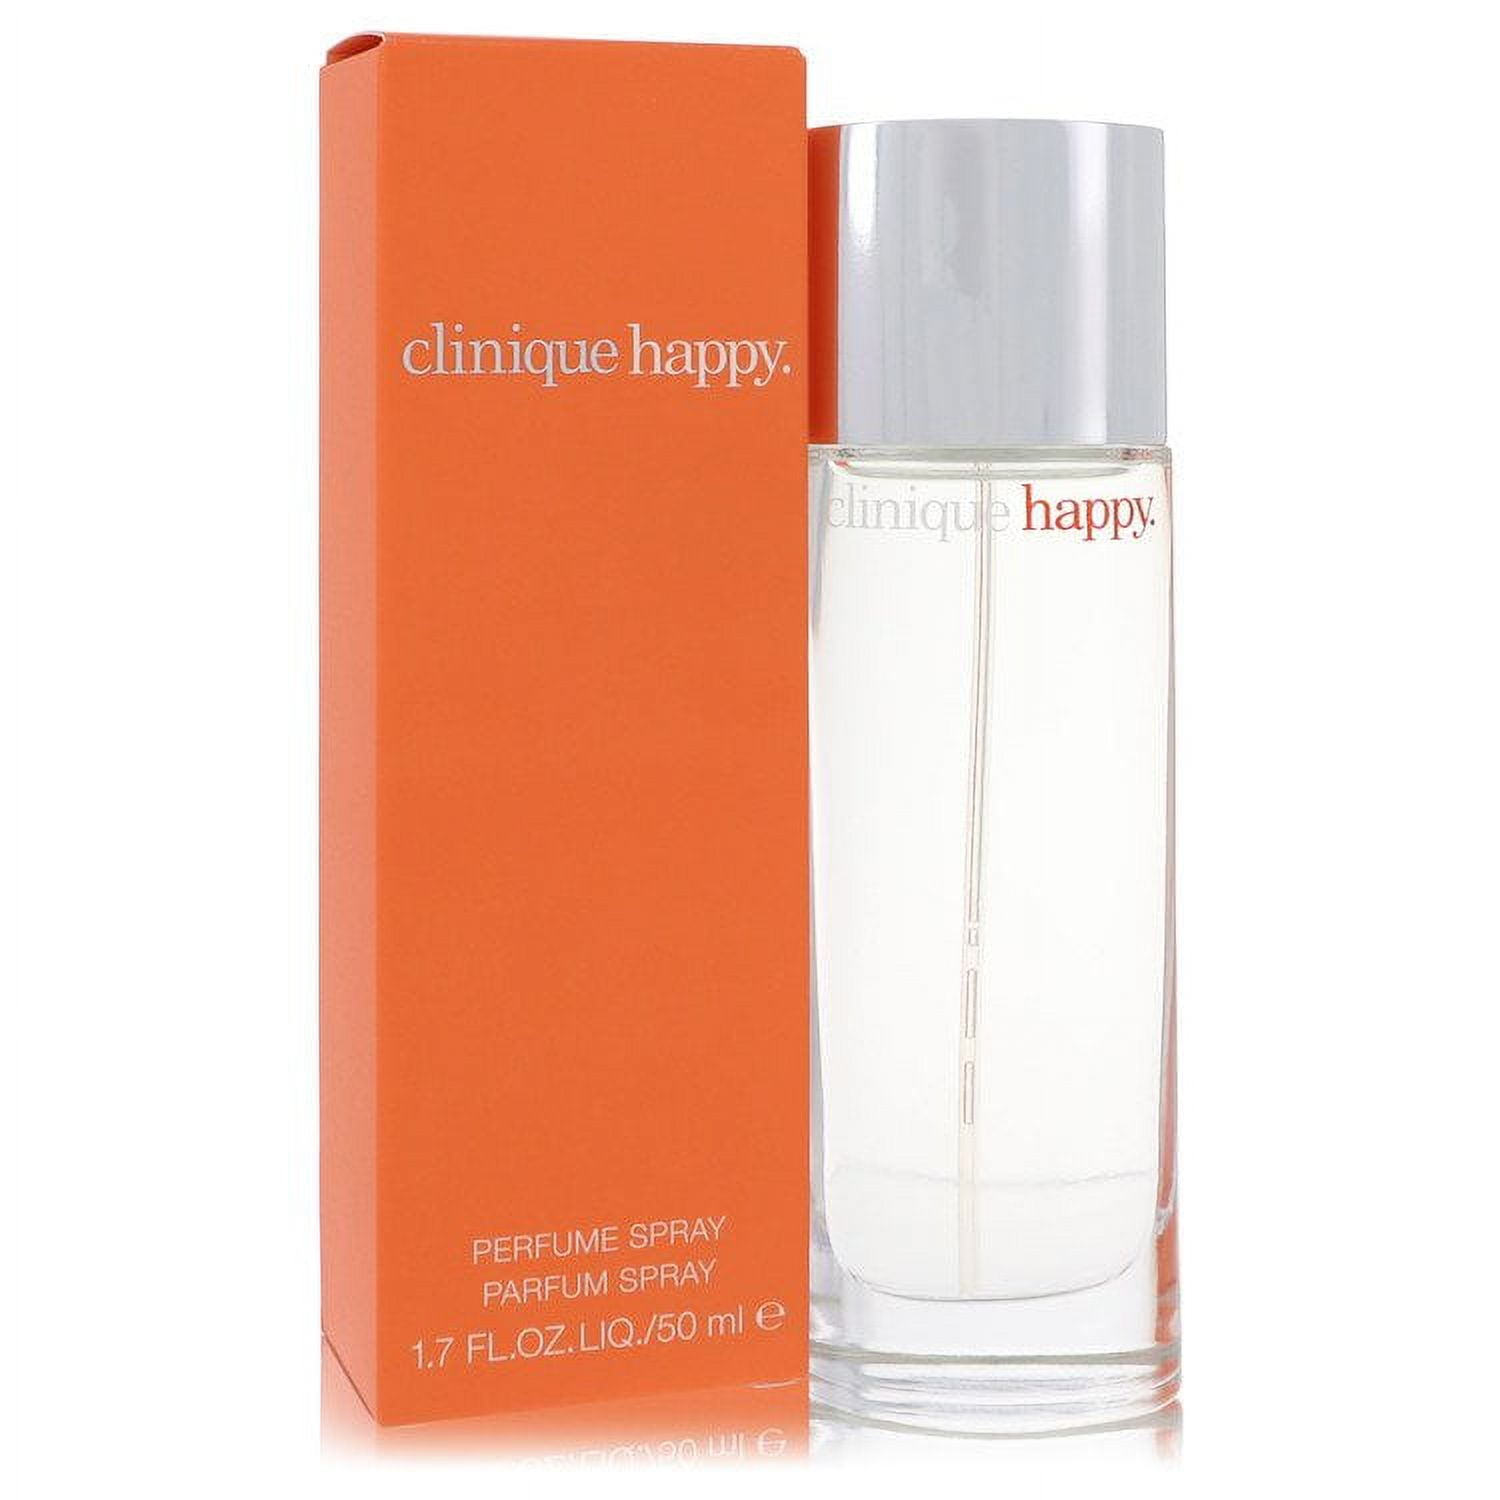 HAPPY by Clinique oz De for Female Spray 1.7 Eau Parfum